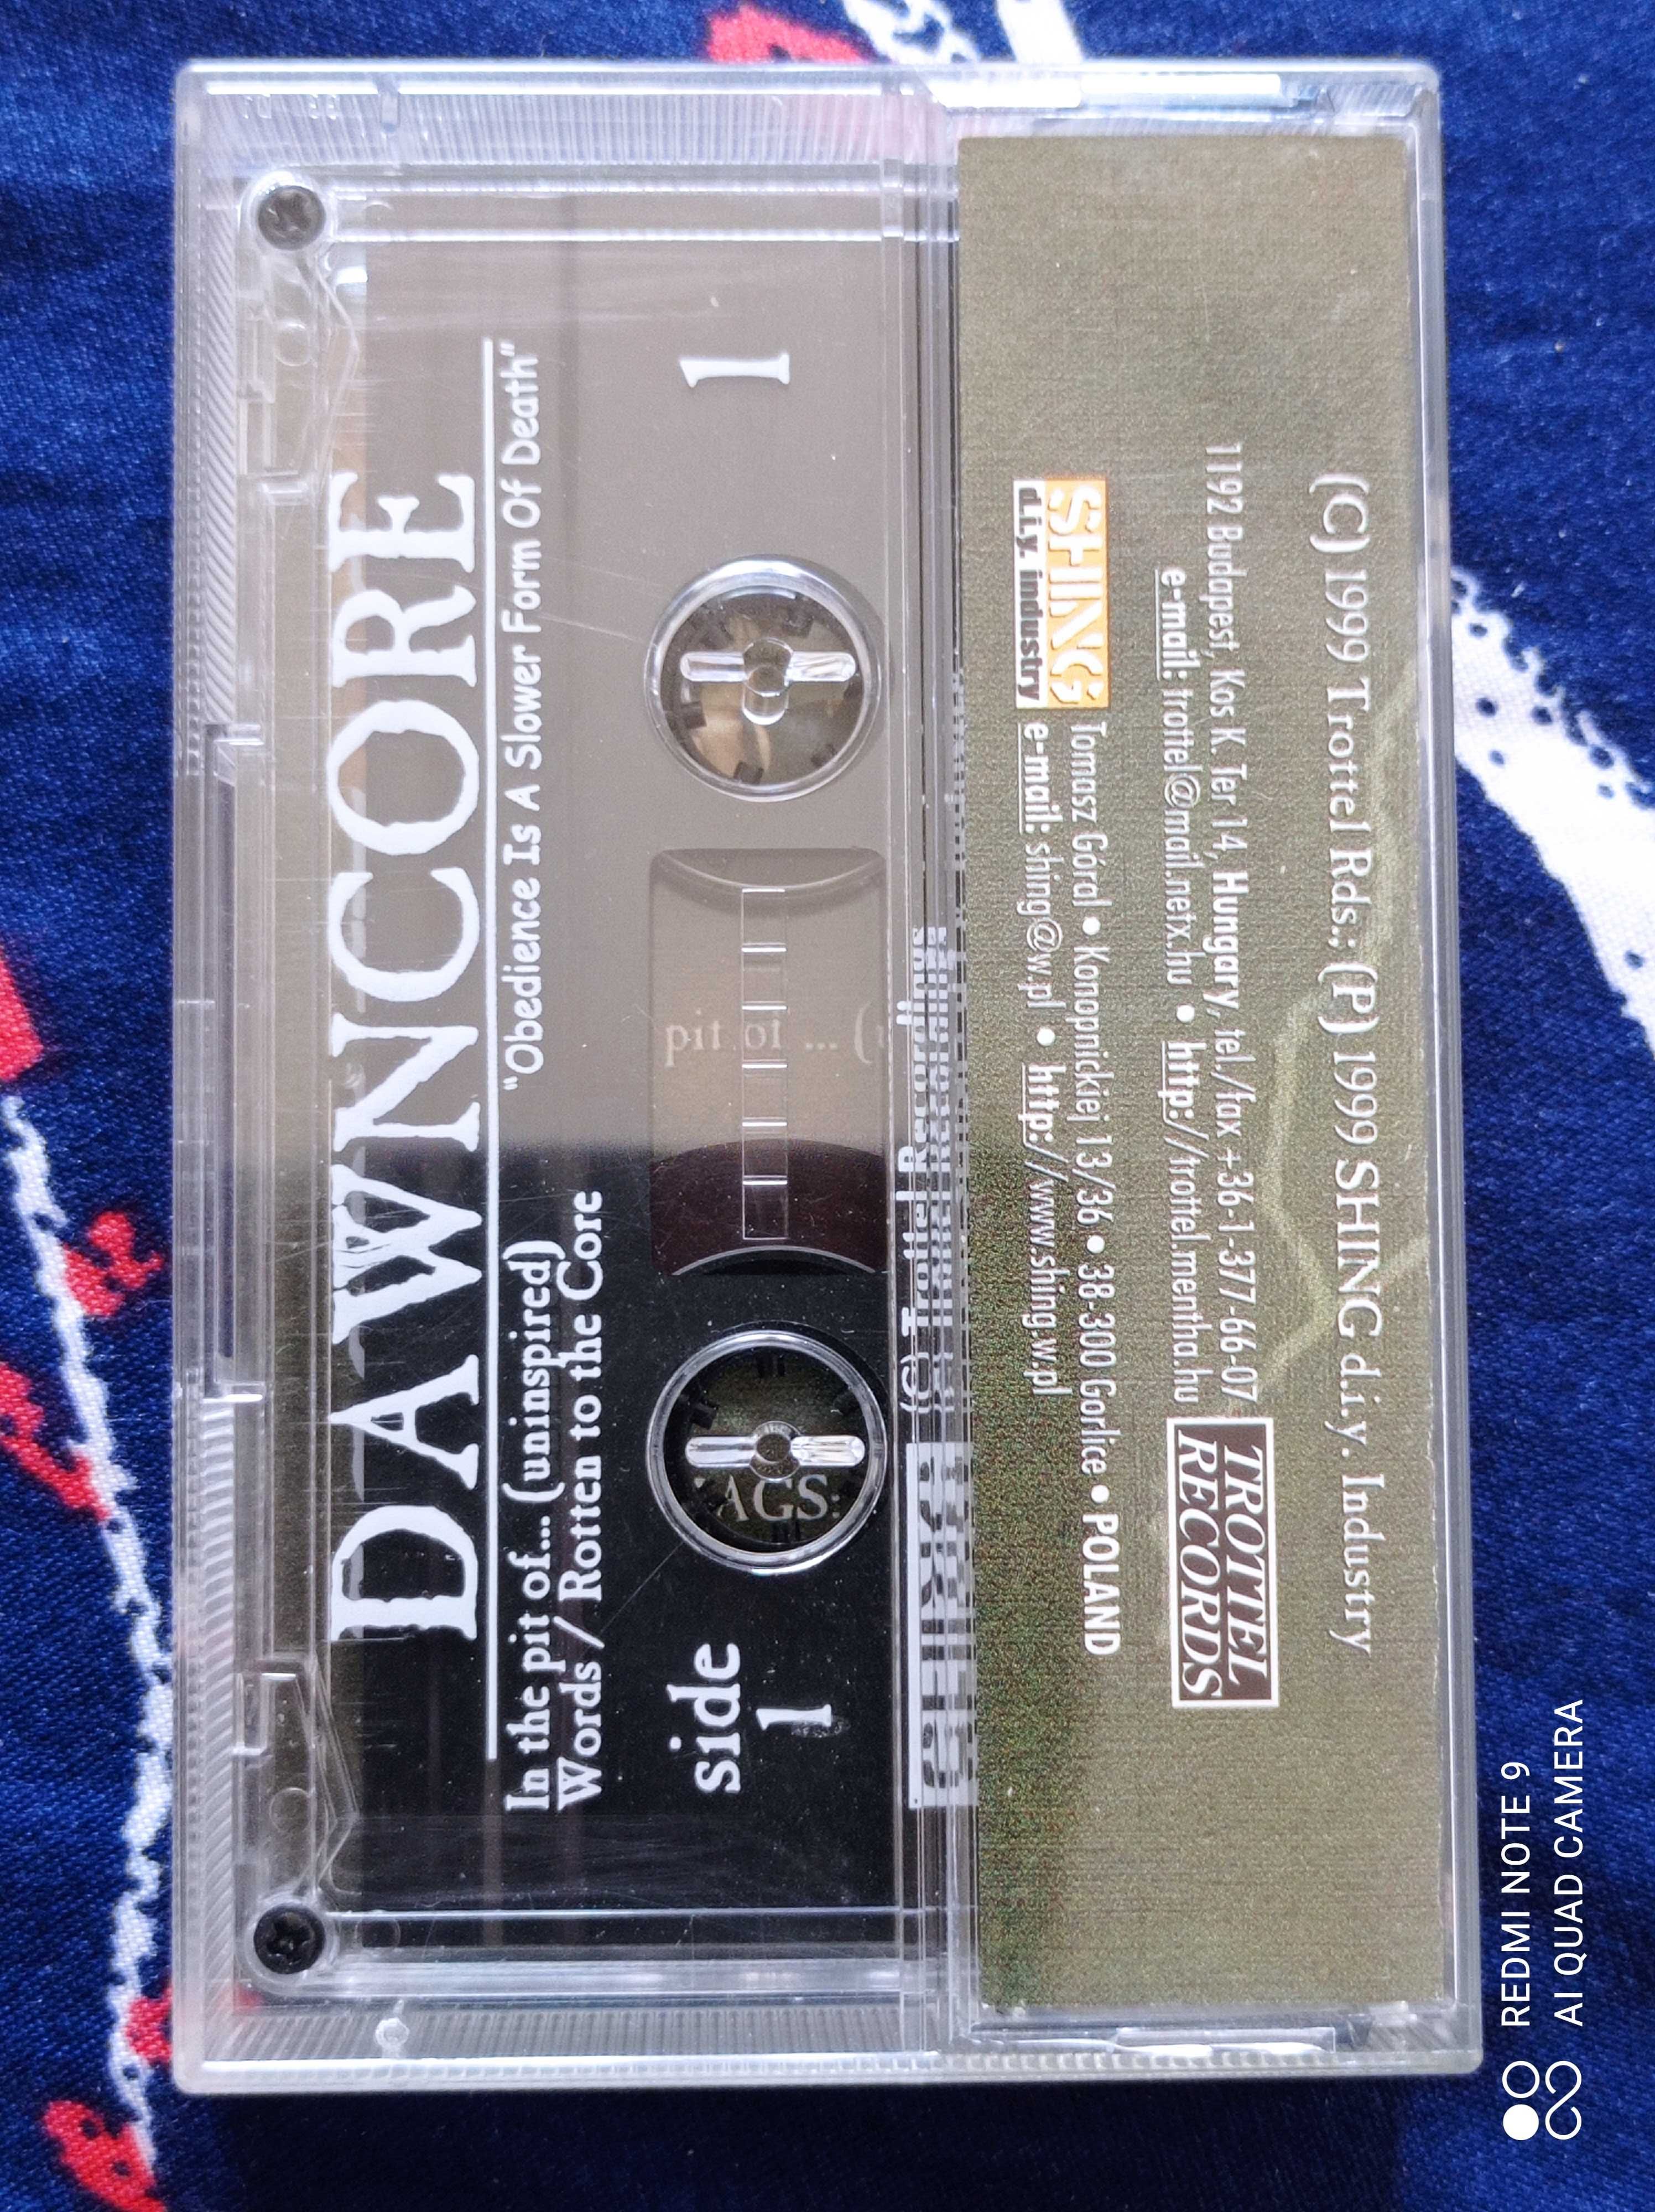 Dawncore - Obedience Is The Slower Form Of Death kaseta Newborn